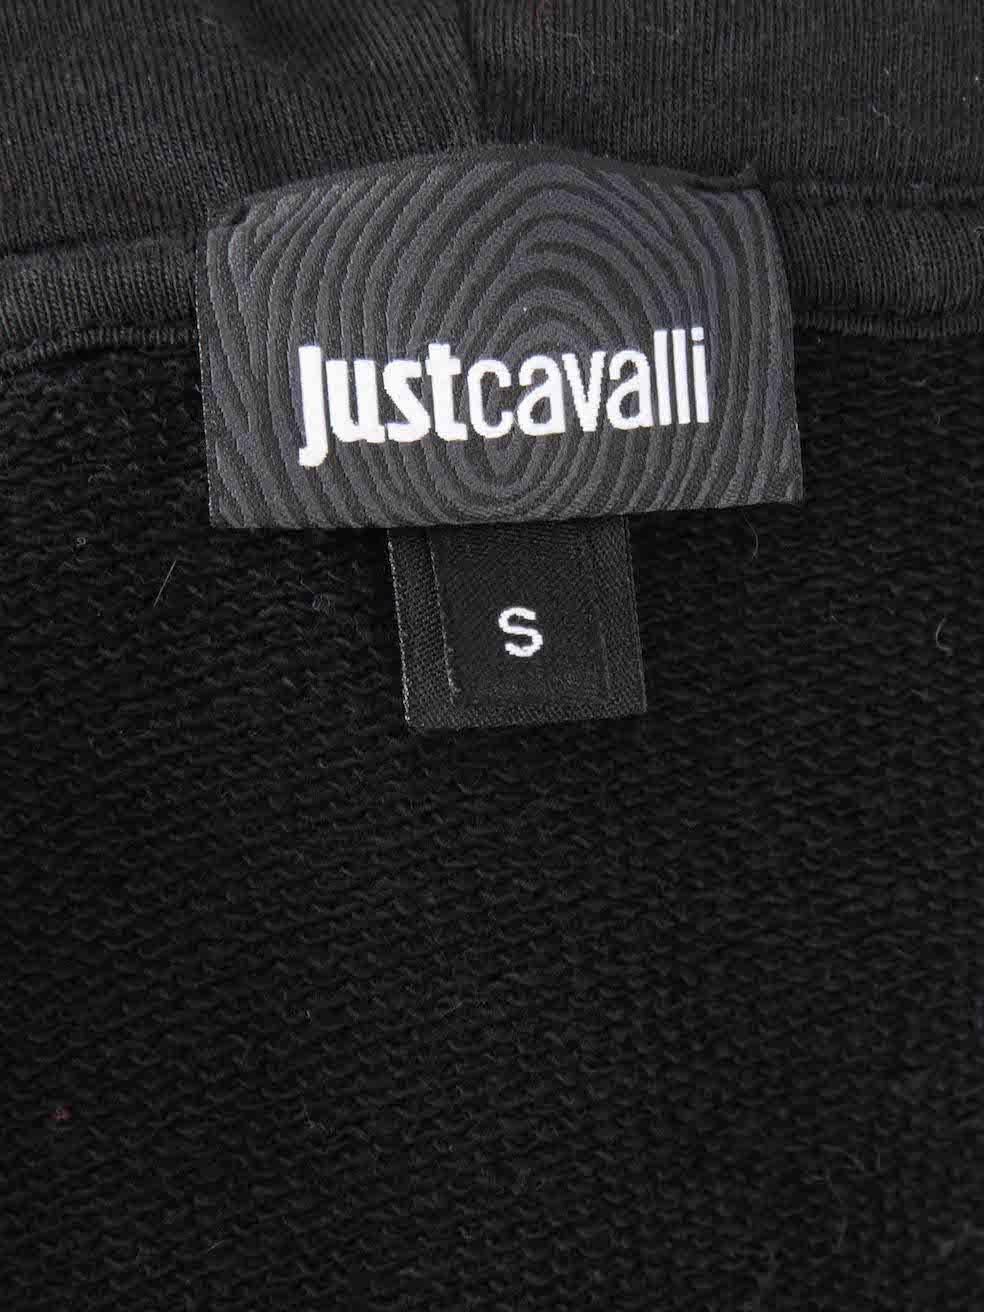 Roberto Cavalli Just Cavalli Black Leather Panel Hooded Bomber Jacket Size S 3